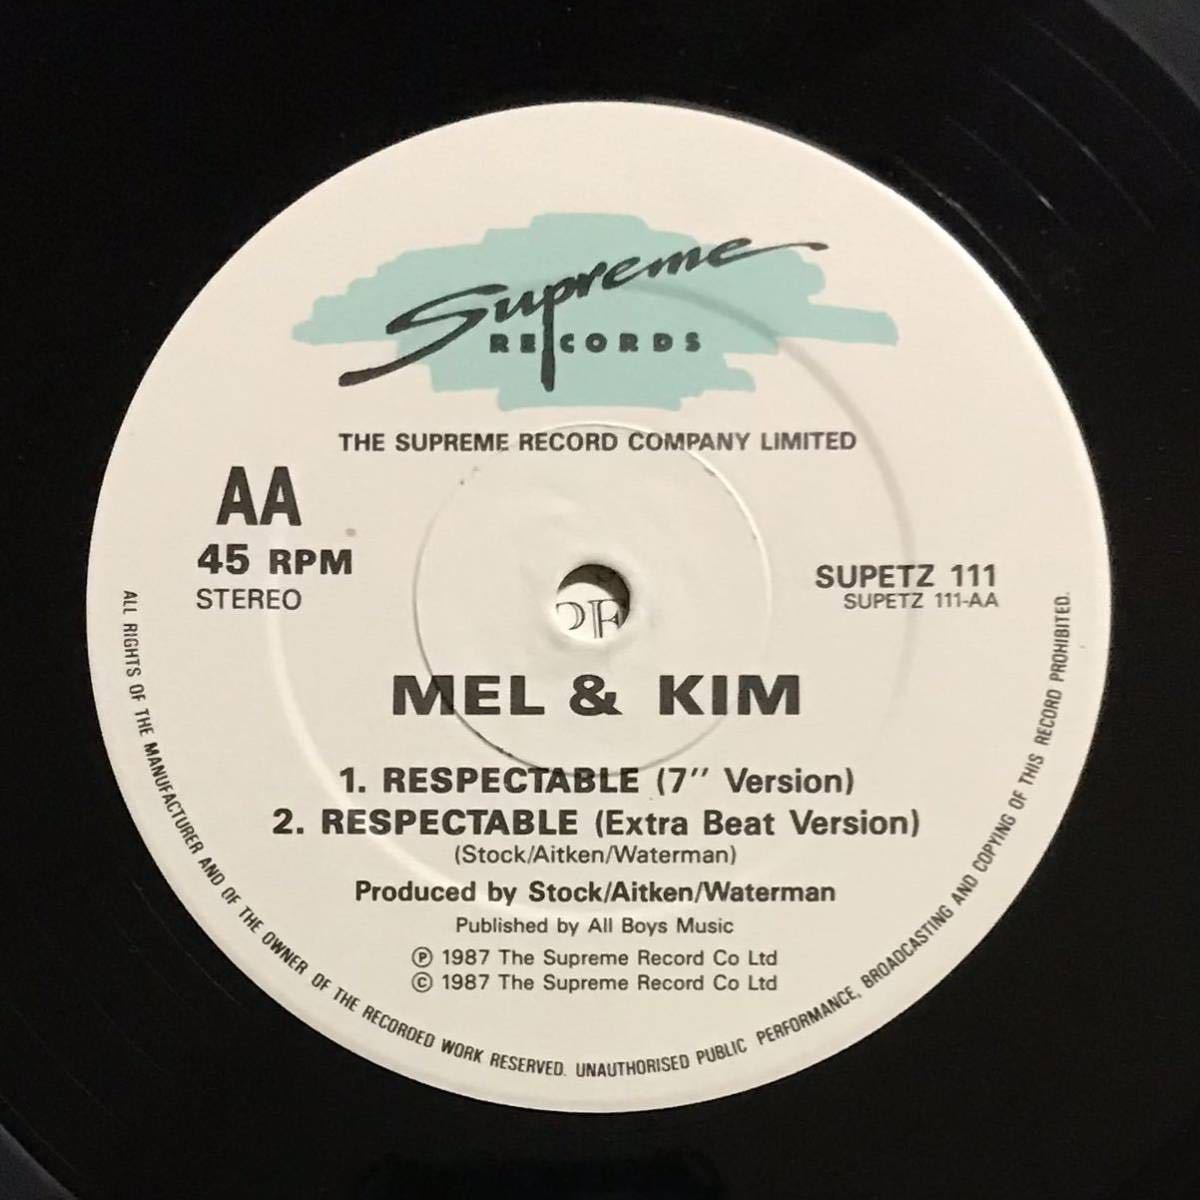 ★【r&b disco】Mel & Kim / Respectable (Shop Mix)［12inch］オリジナル盤《3-2-35 9595》_画像4